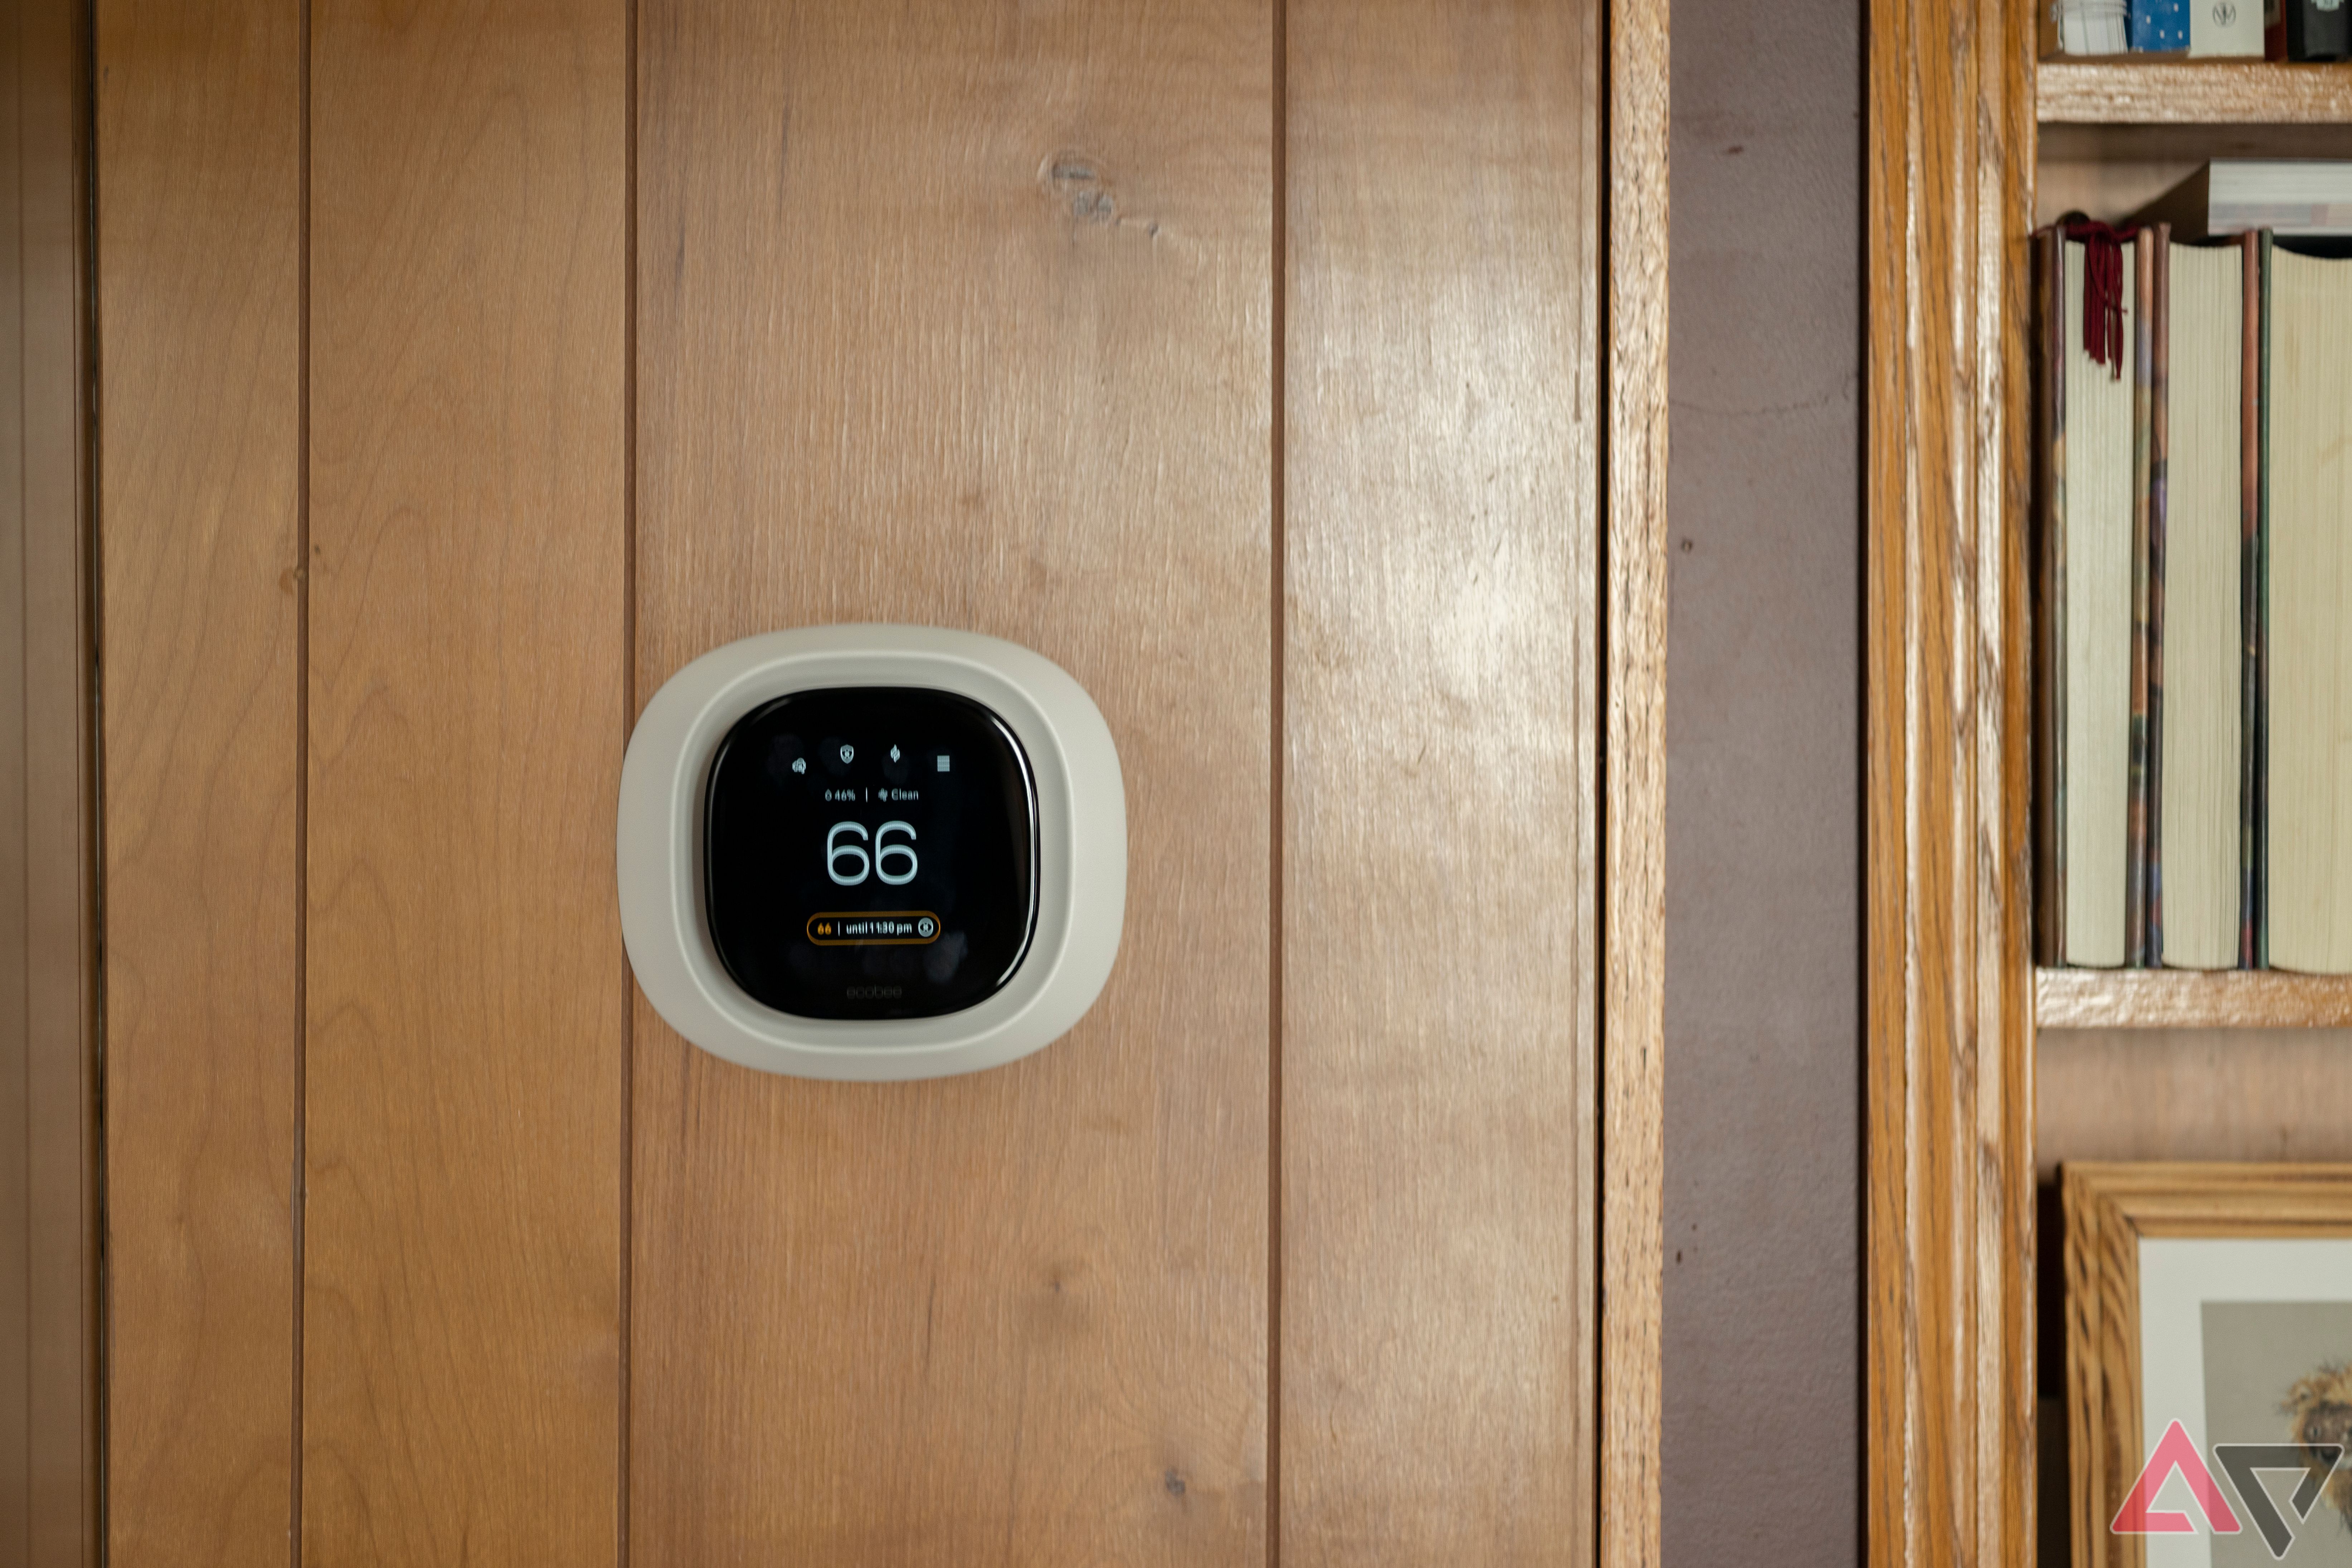 Ecobee Premium Smart Thermostat on wood paneled wall next to bookshelf